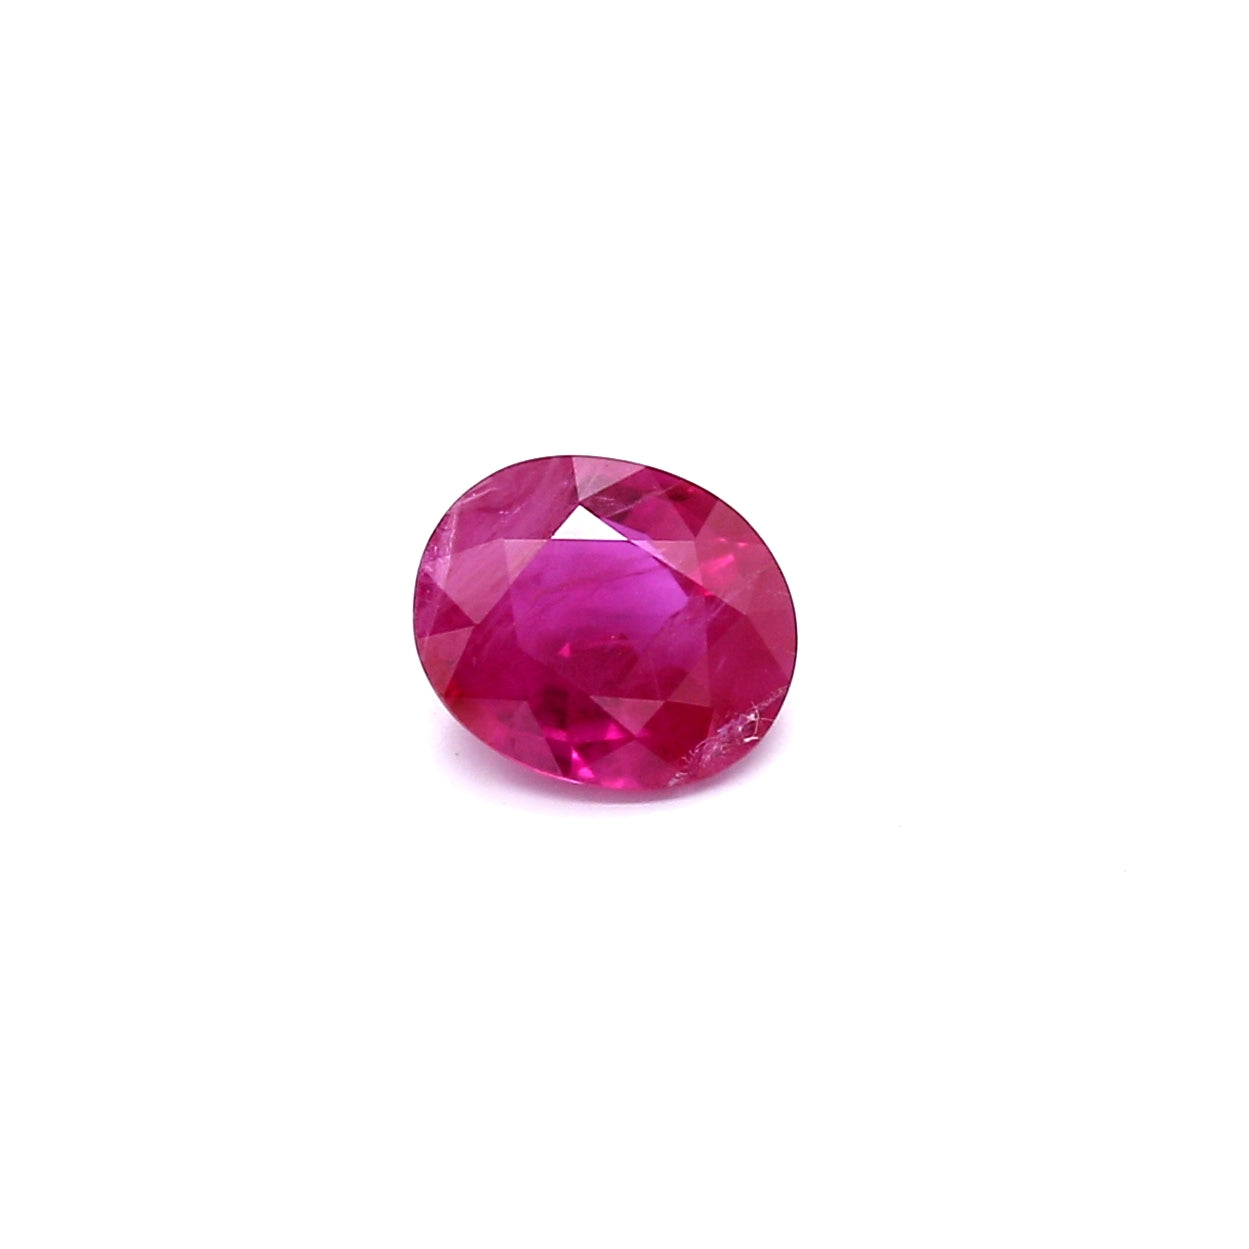 1.01ct Pinkish Red, Oval Ruby, H(b), Myanmar - 6.79 x 5.71 x 3.08mm